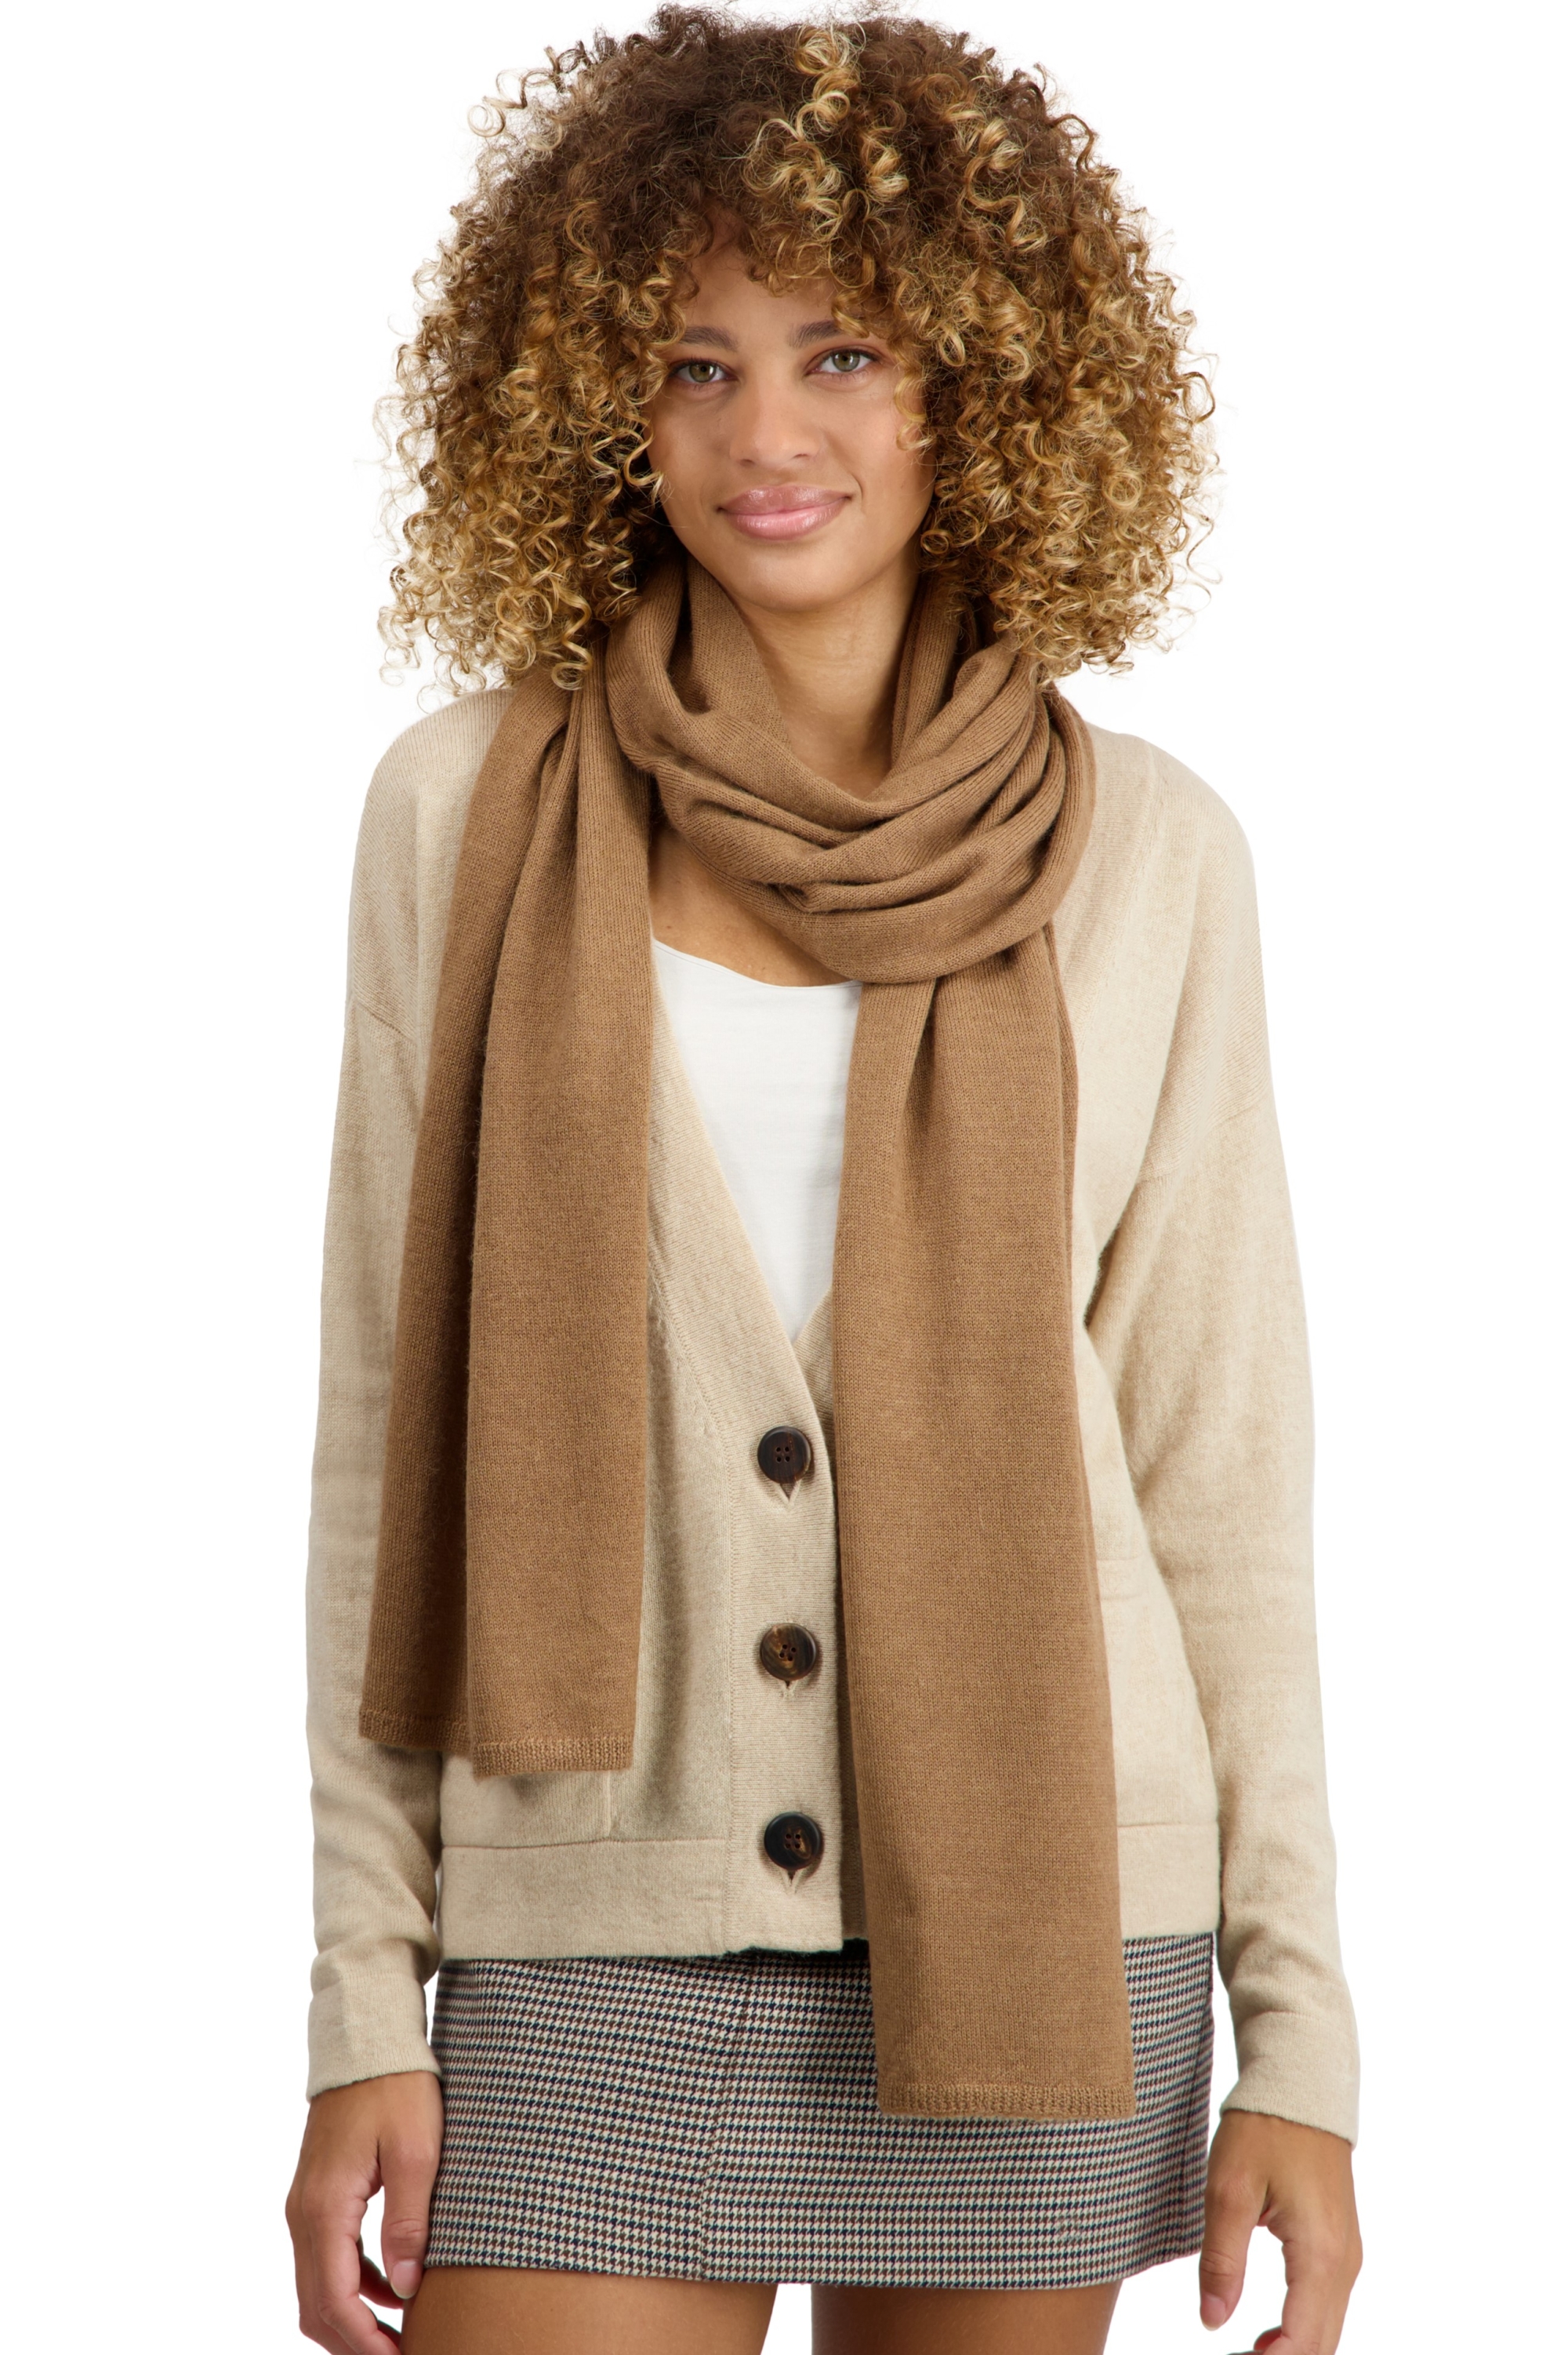 Baby Alpaca accessories scarf mufflers vancouver caramel 210 x 45 cm